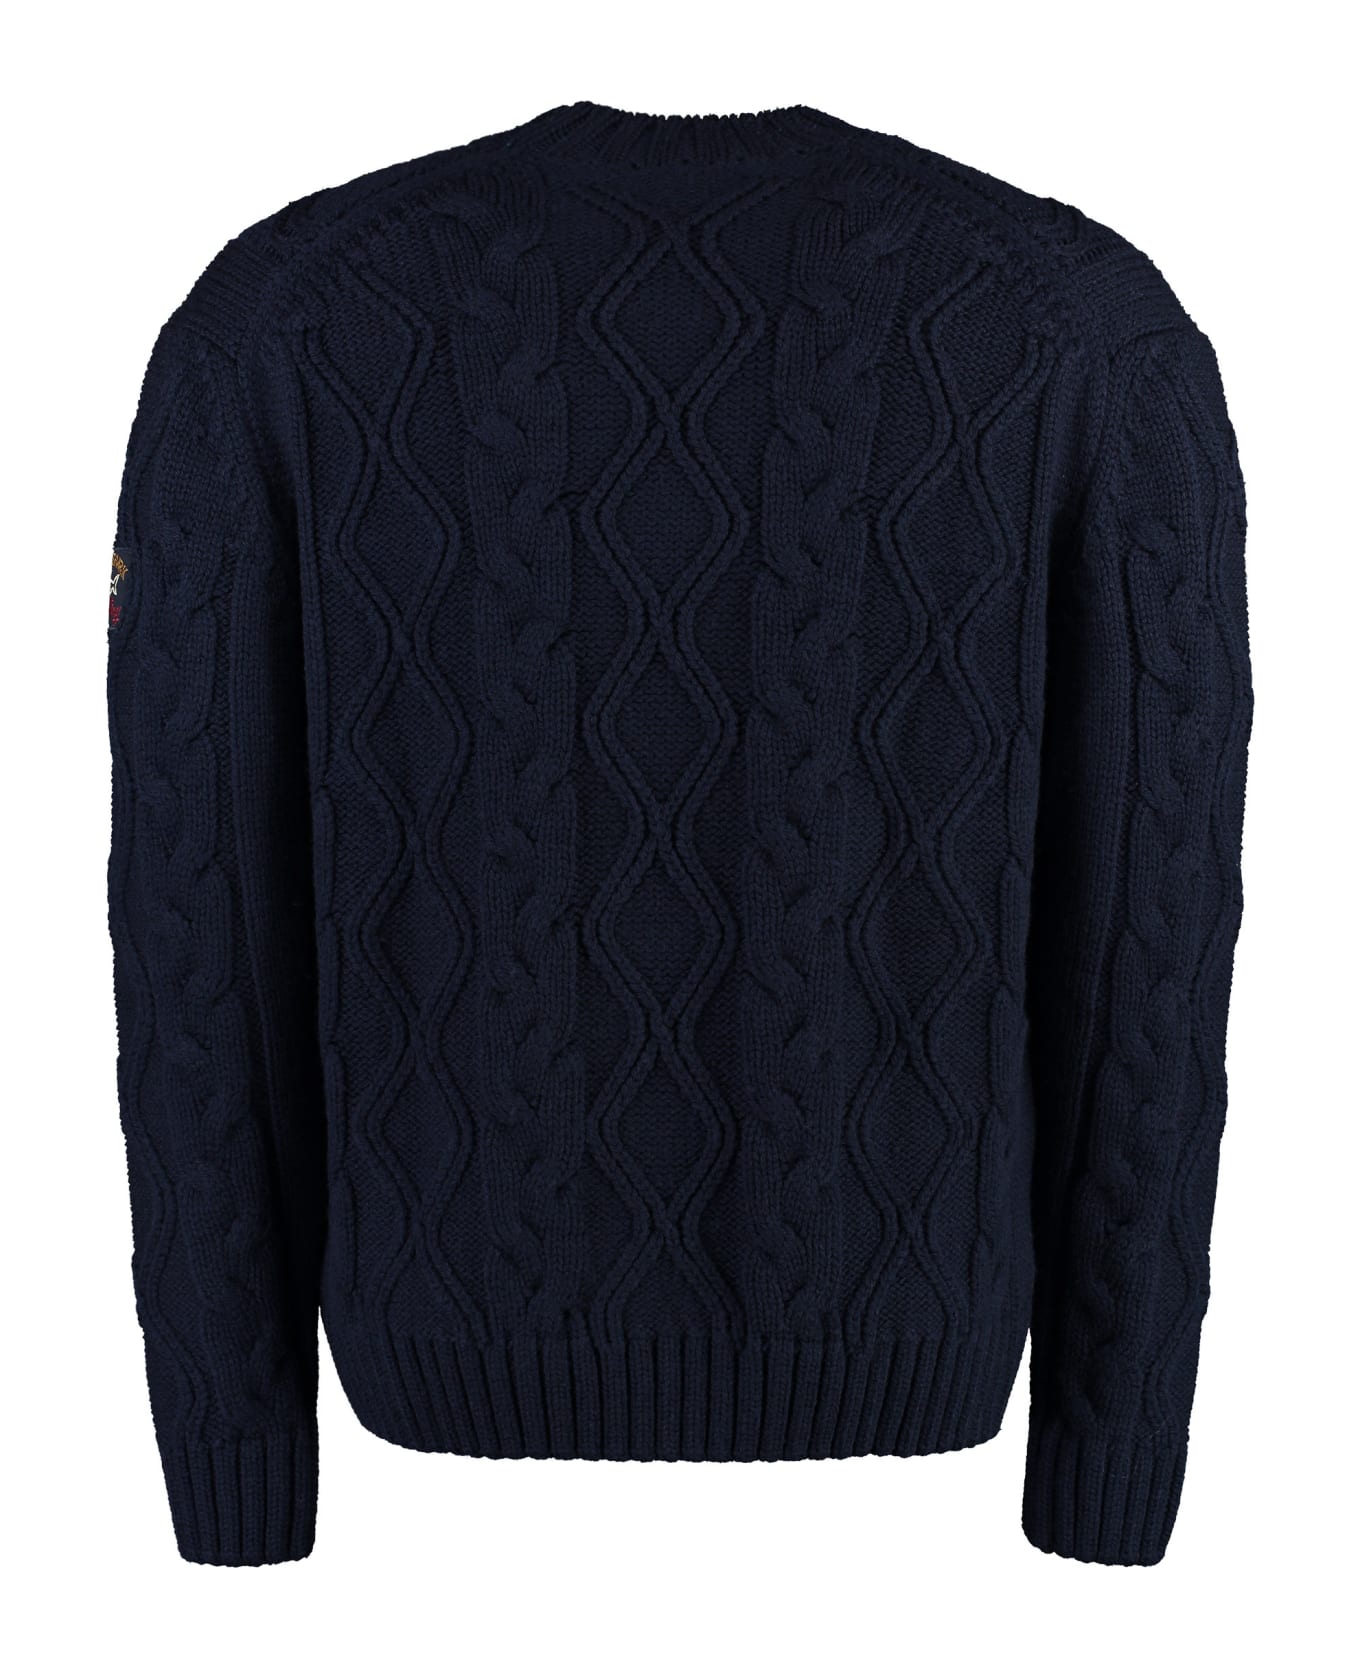 Paul&Shark Cable Knit Sweater - blue ニットウェア